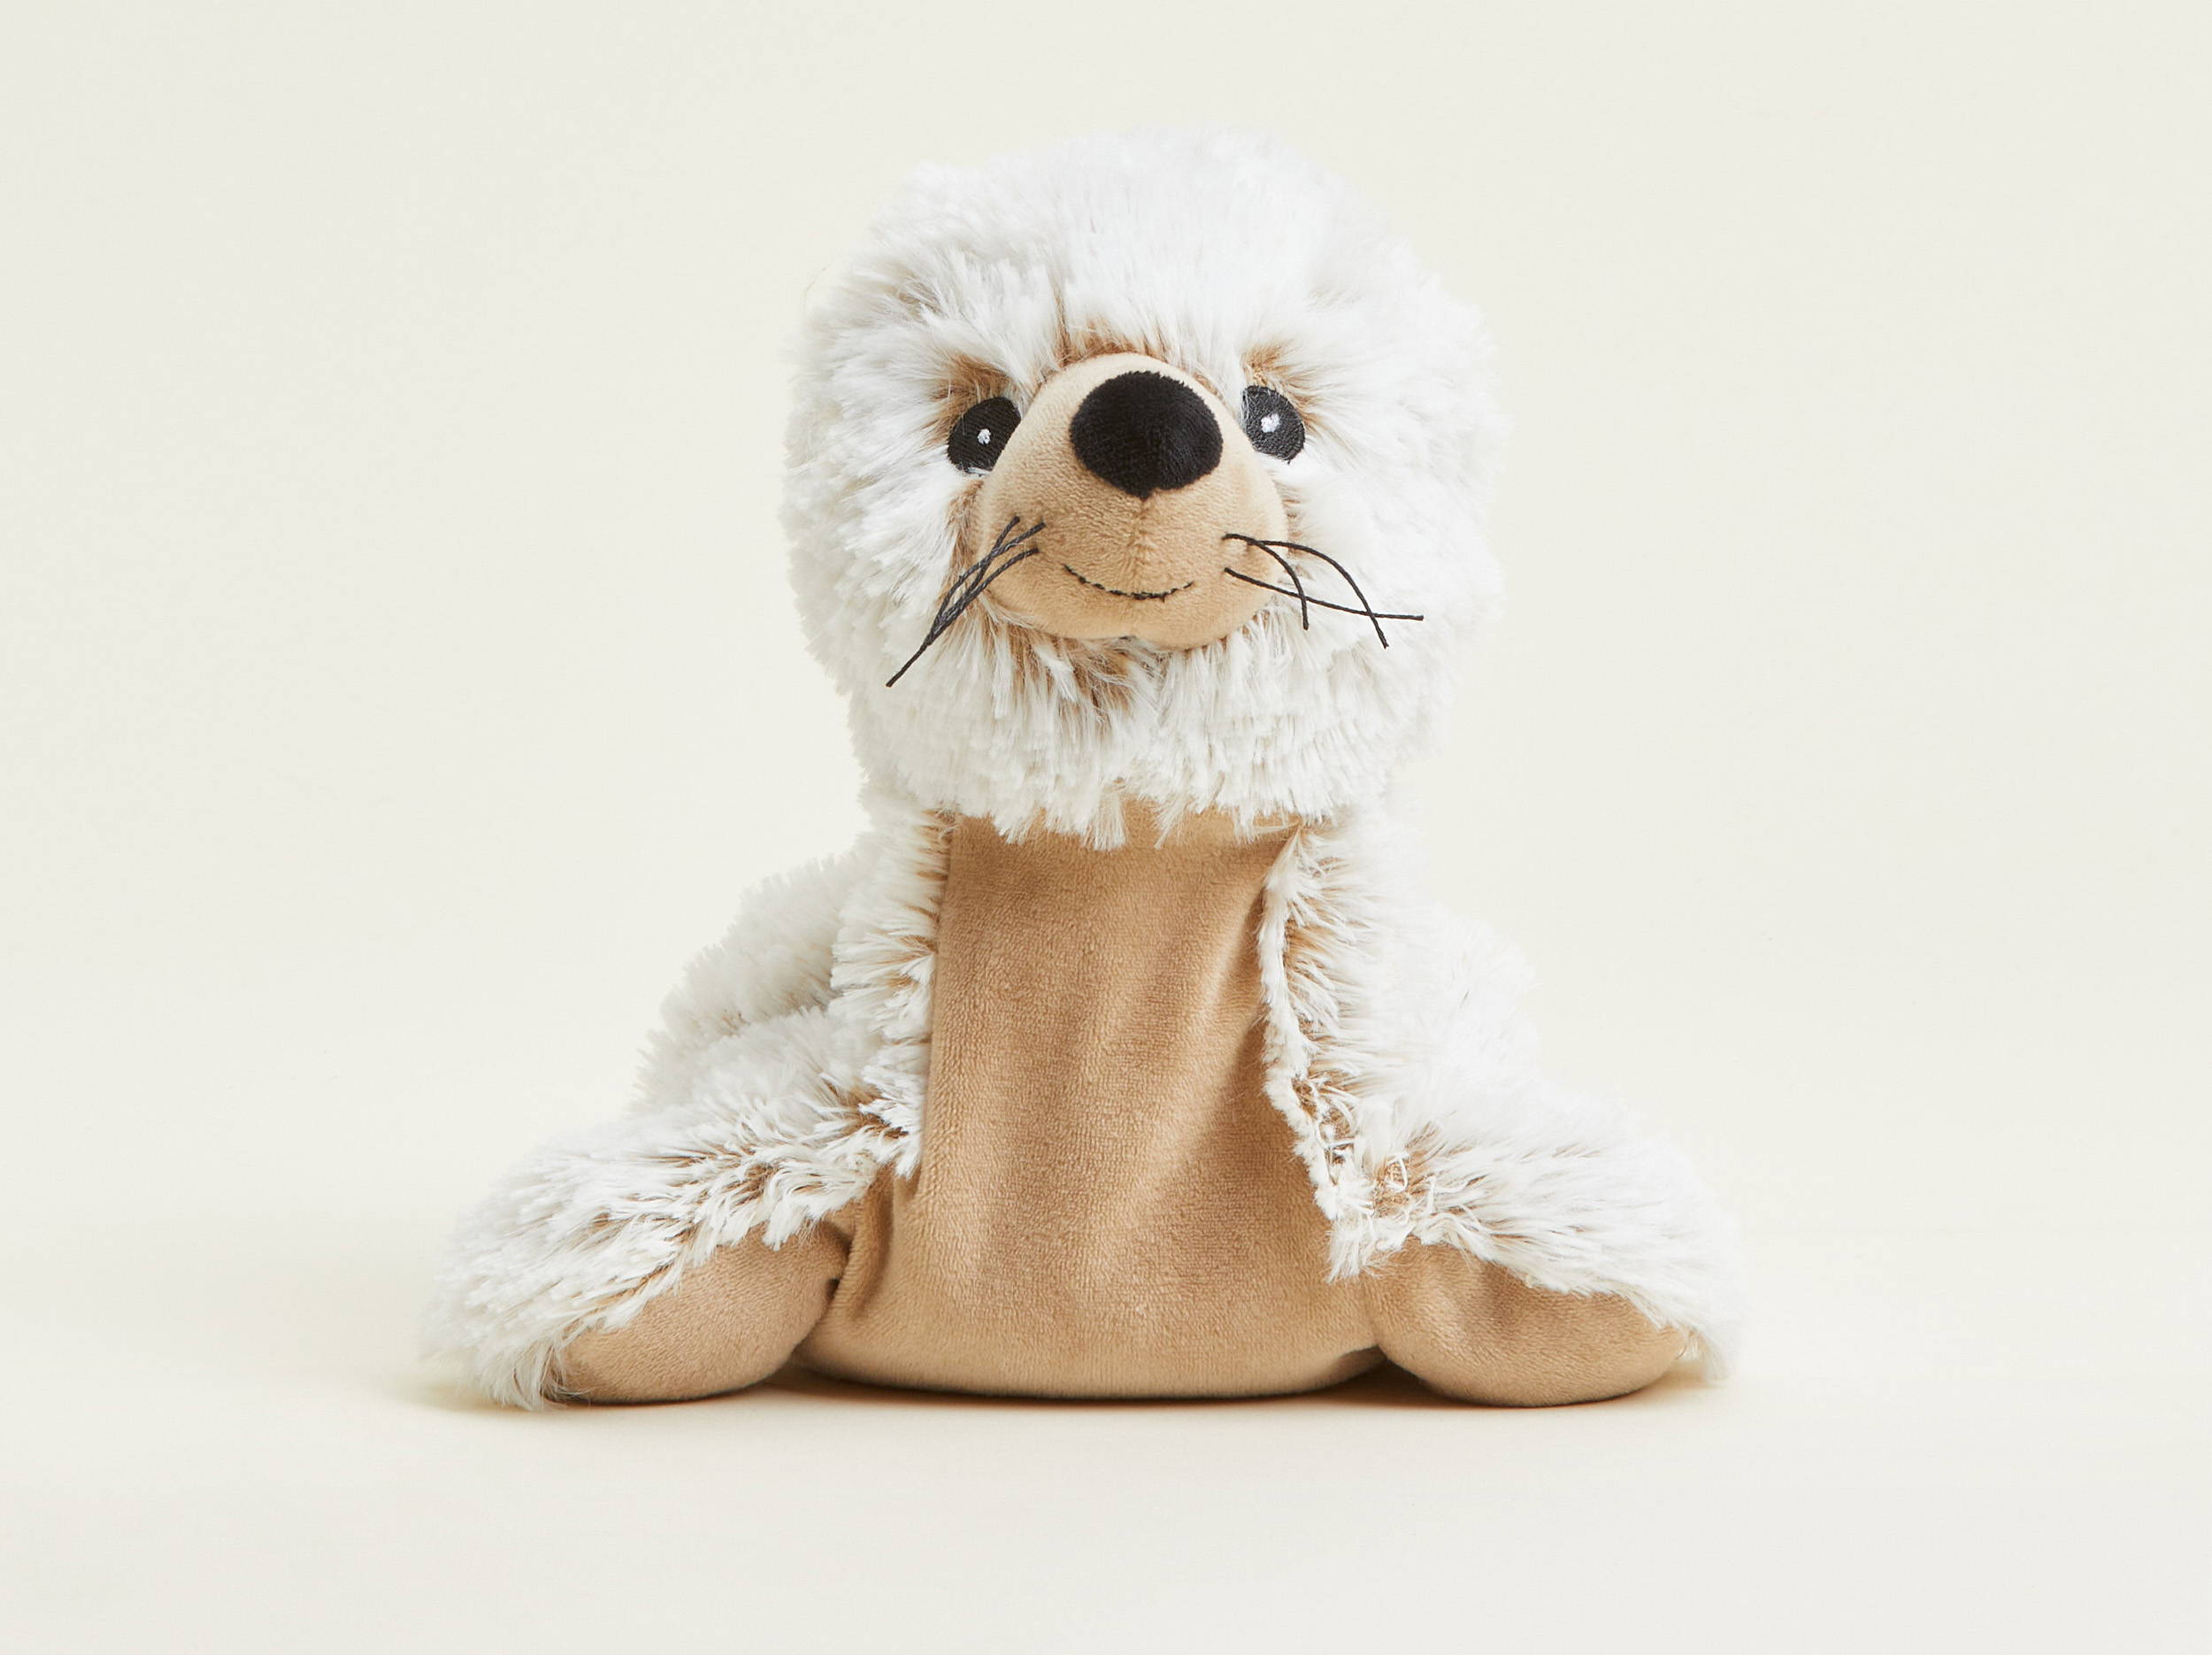 diseño de oso panda relleno de lavanda, 40 cm, 700 g Warmies® Cojín de calor 